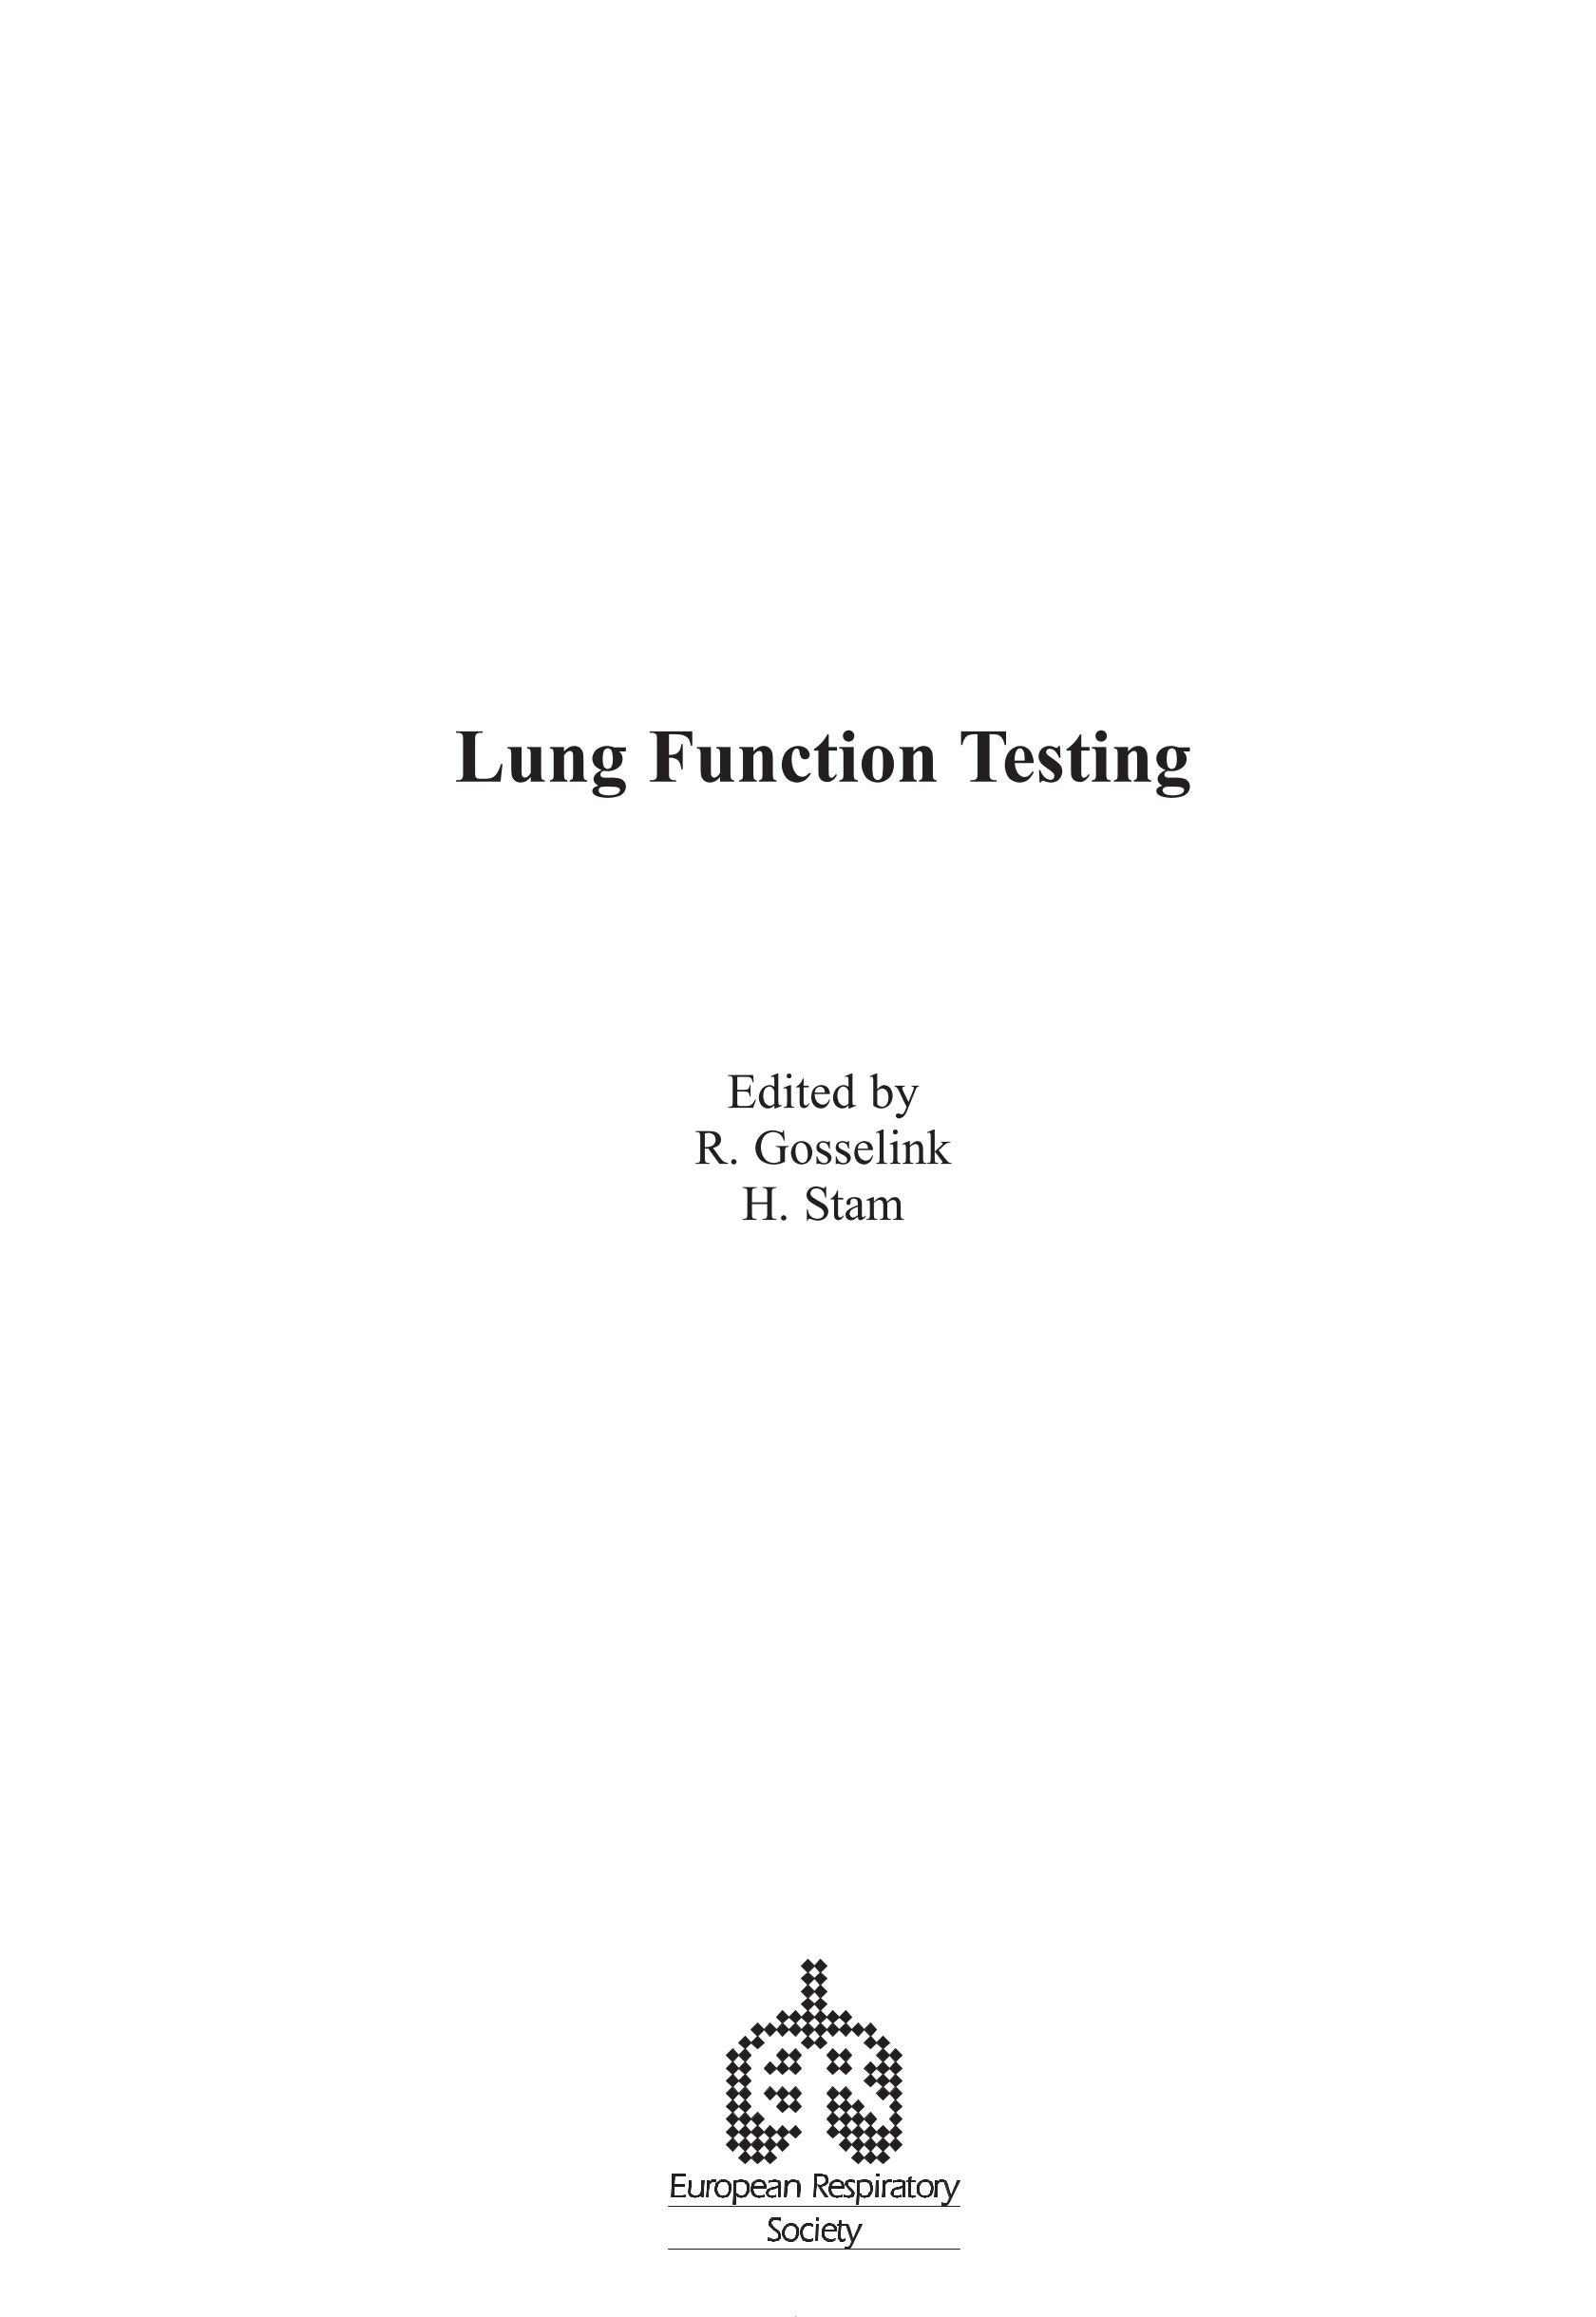 printable-lung-function-testing-page-iii